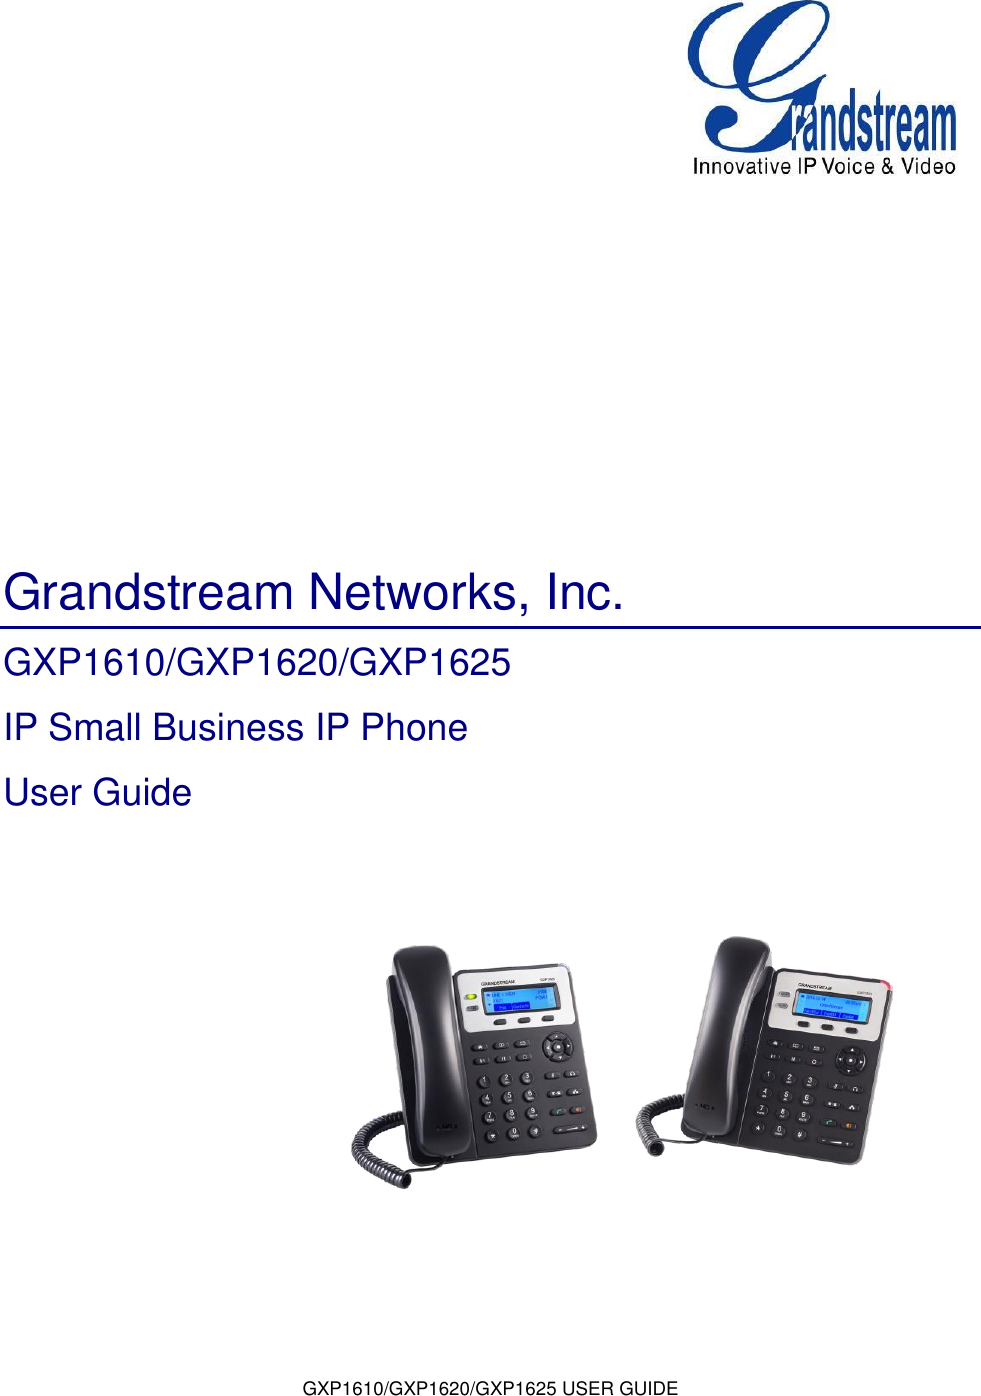 GXP1610/GXP1620/GXP1625 USER GUIDE        Grandstream Networks, Inc. GXP1610/GXP1620/GXP1625  IP Small Business IP Phone User Guide                                